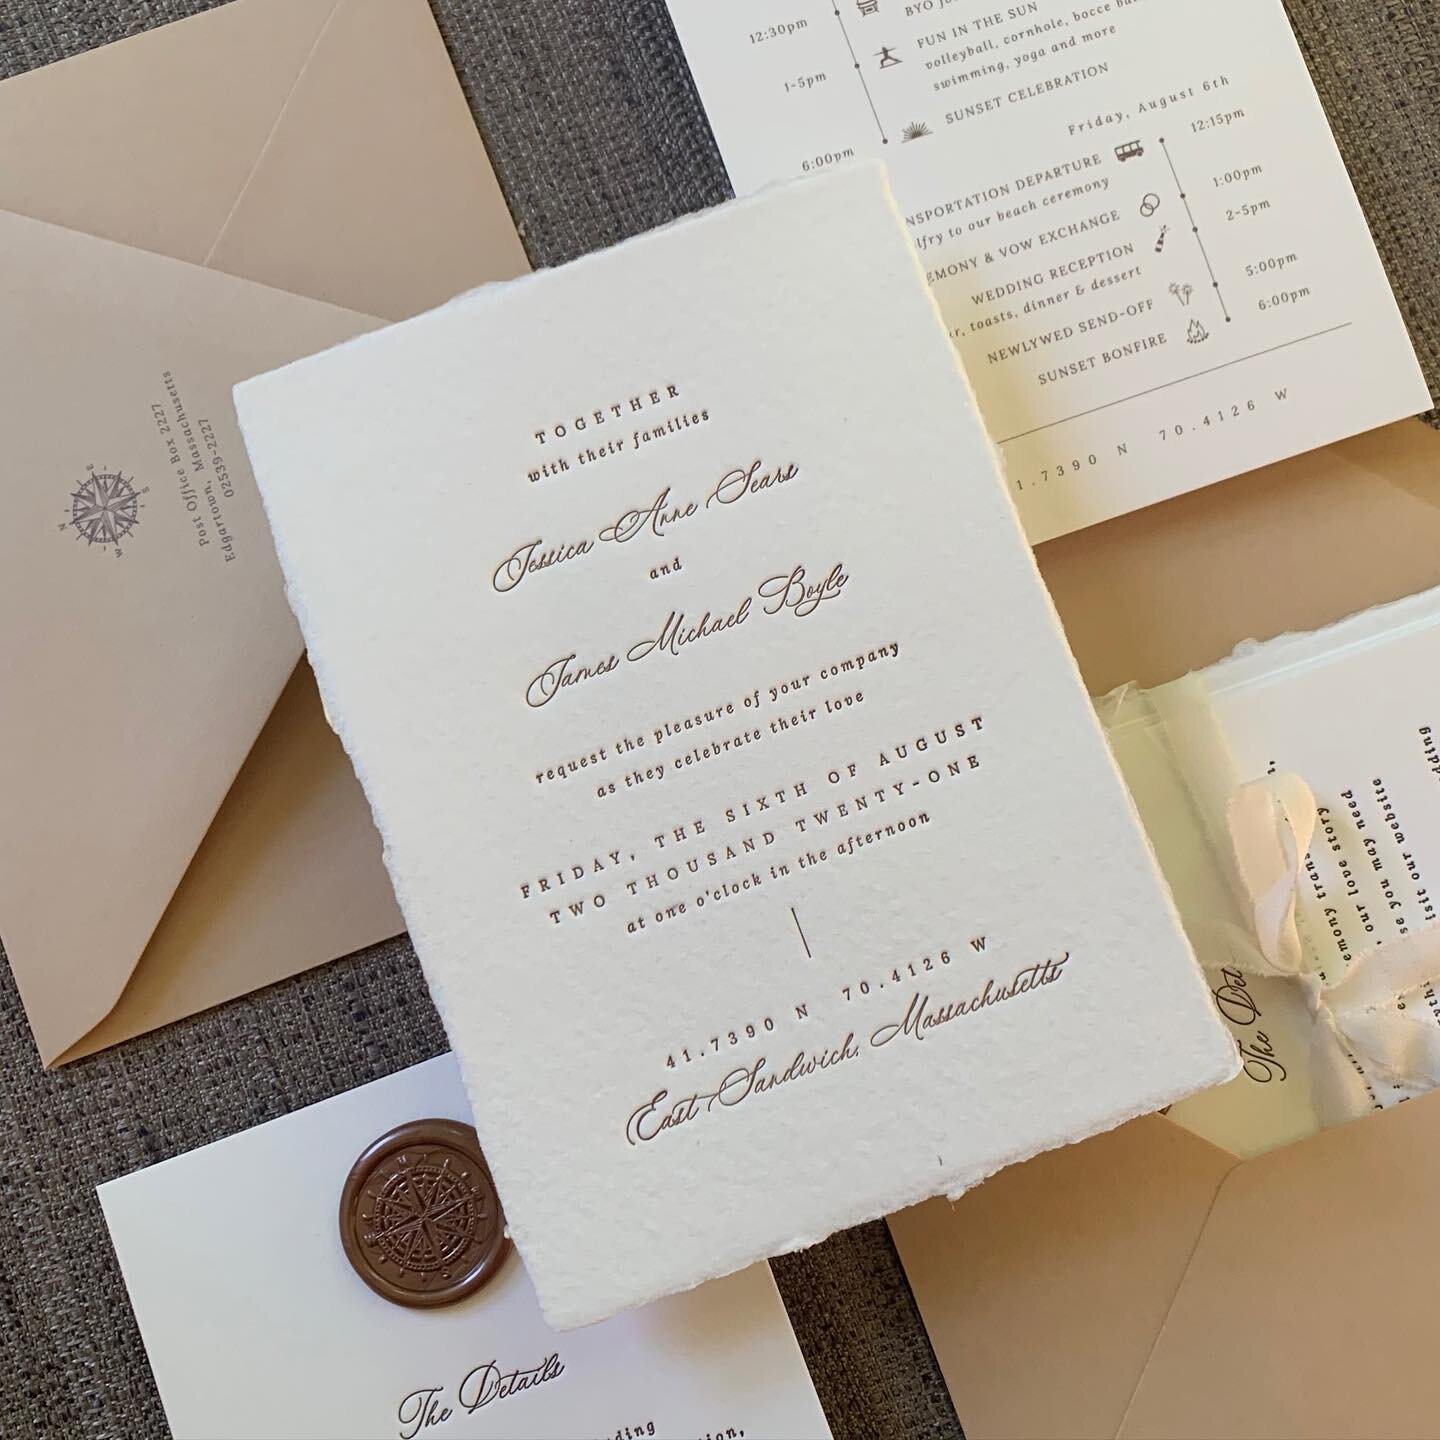 😍 the details in this Cape Cod invitation suite!